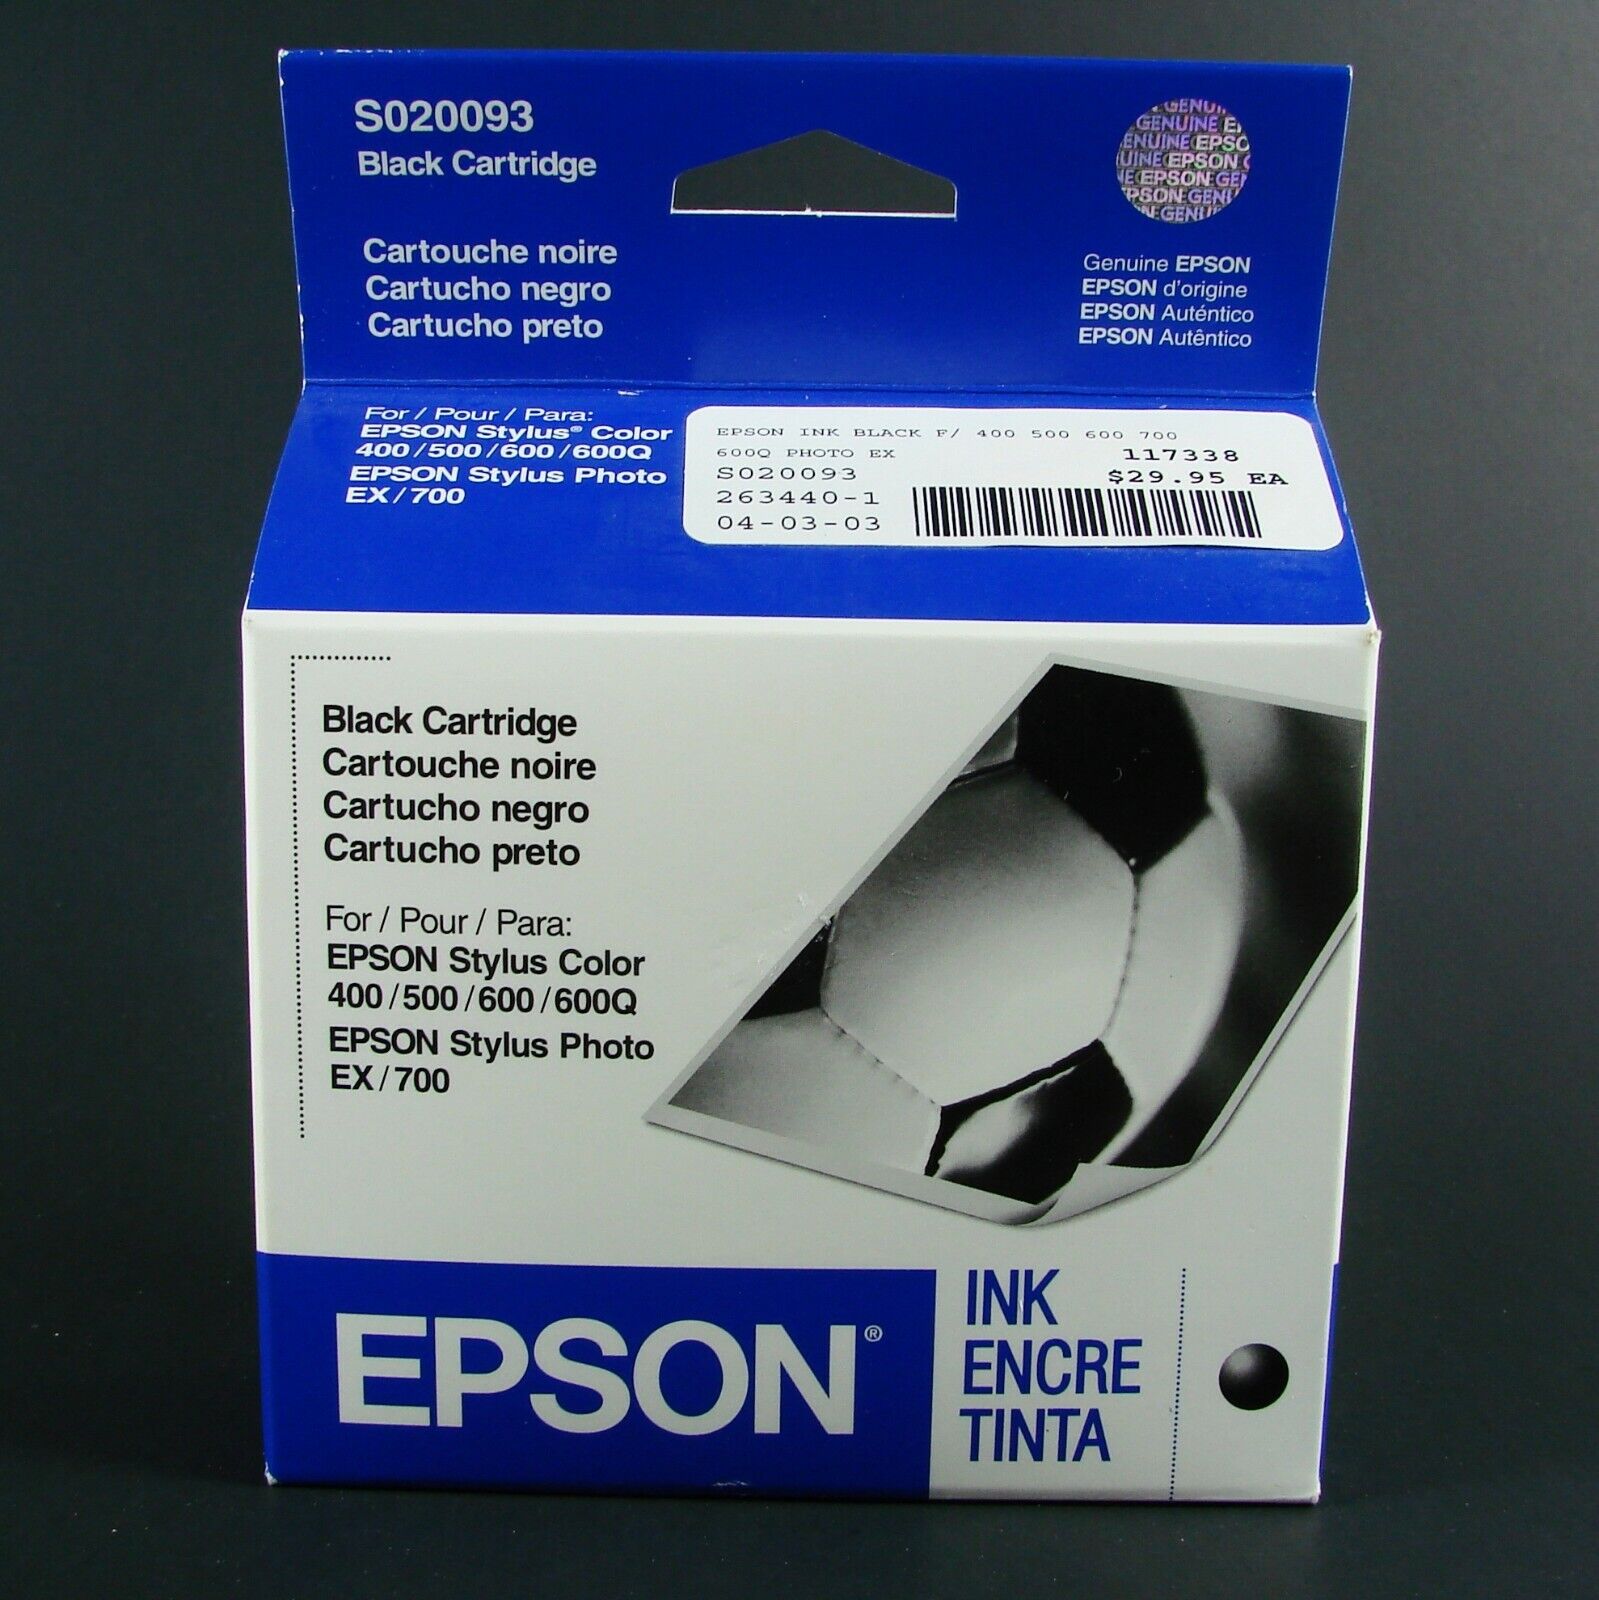 NEW Genuine Epson Stylus Print Cartridge S020093 Black Expired Jan 2006 NIP 